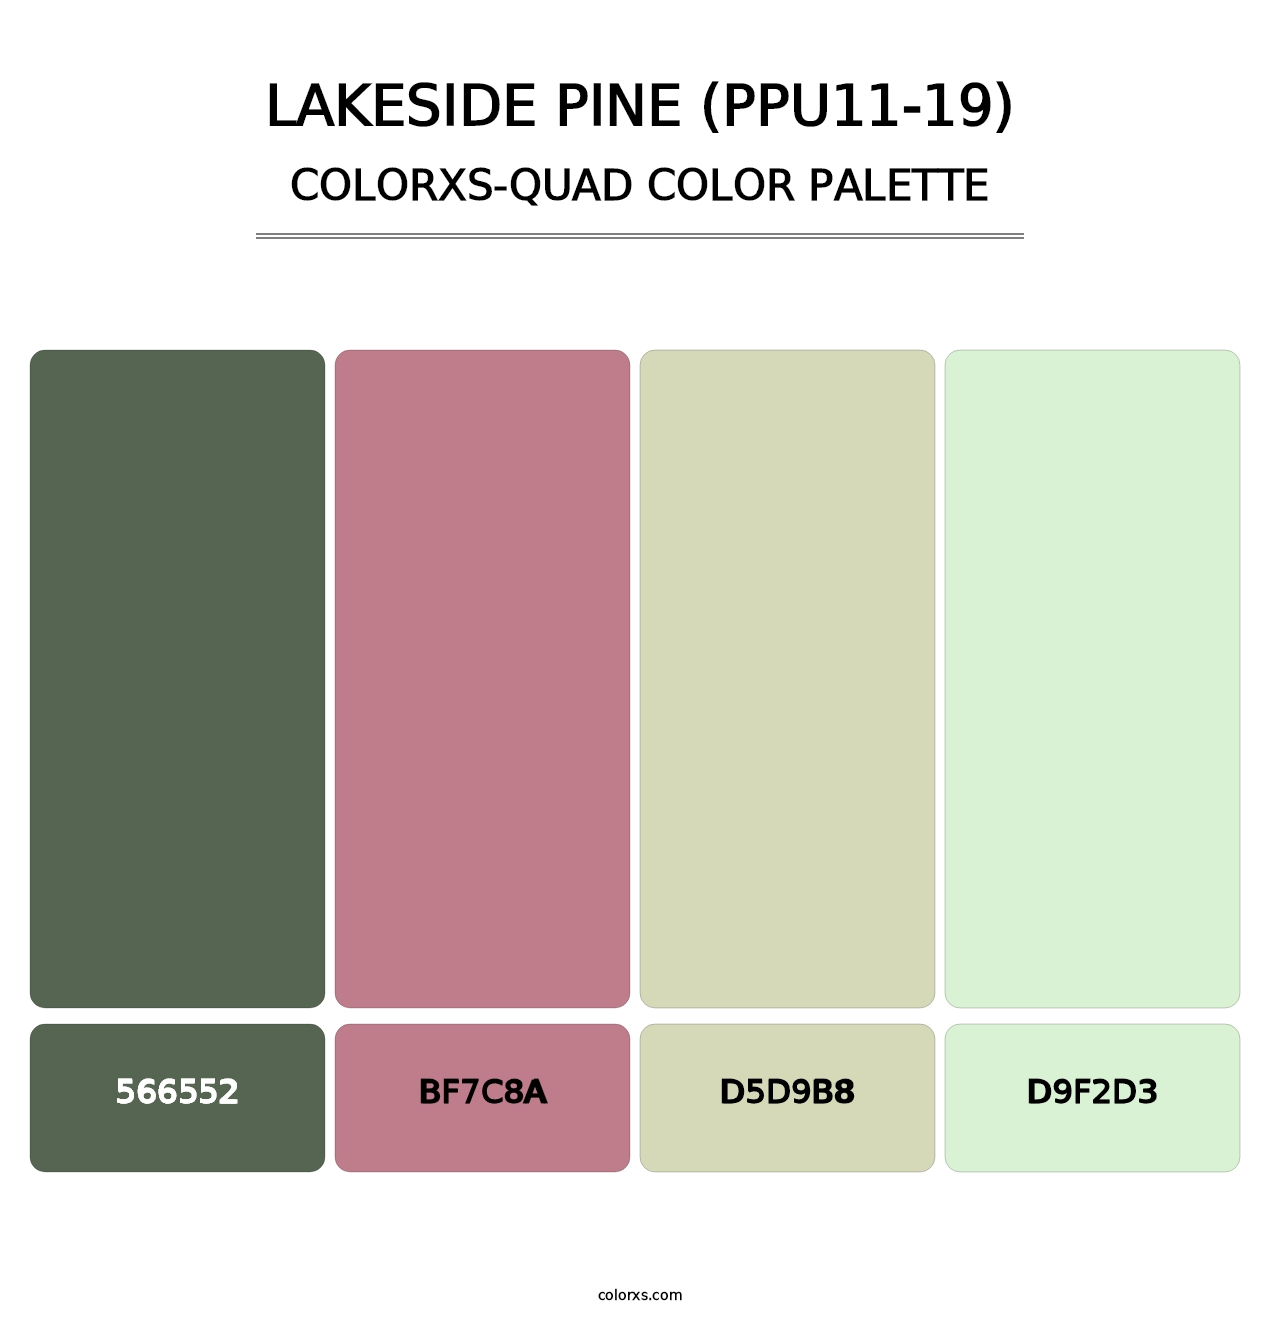 Lakeside Pine (PPU11-19) - Colorxs Quad Palette